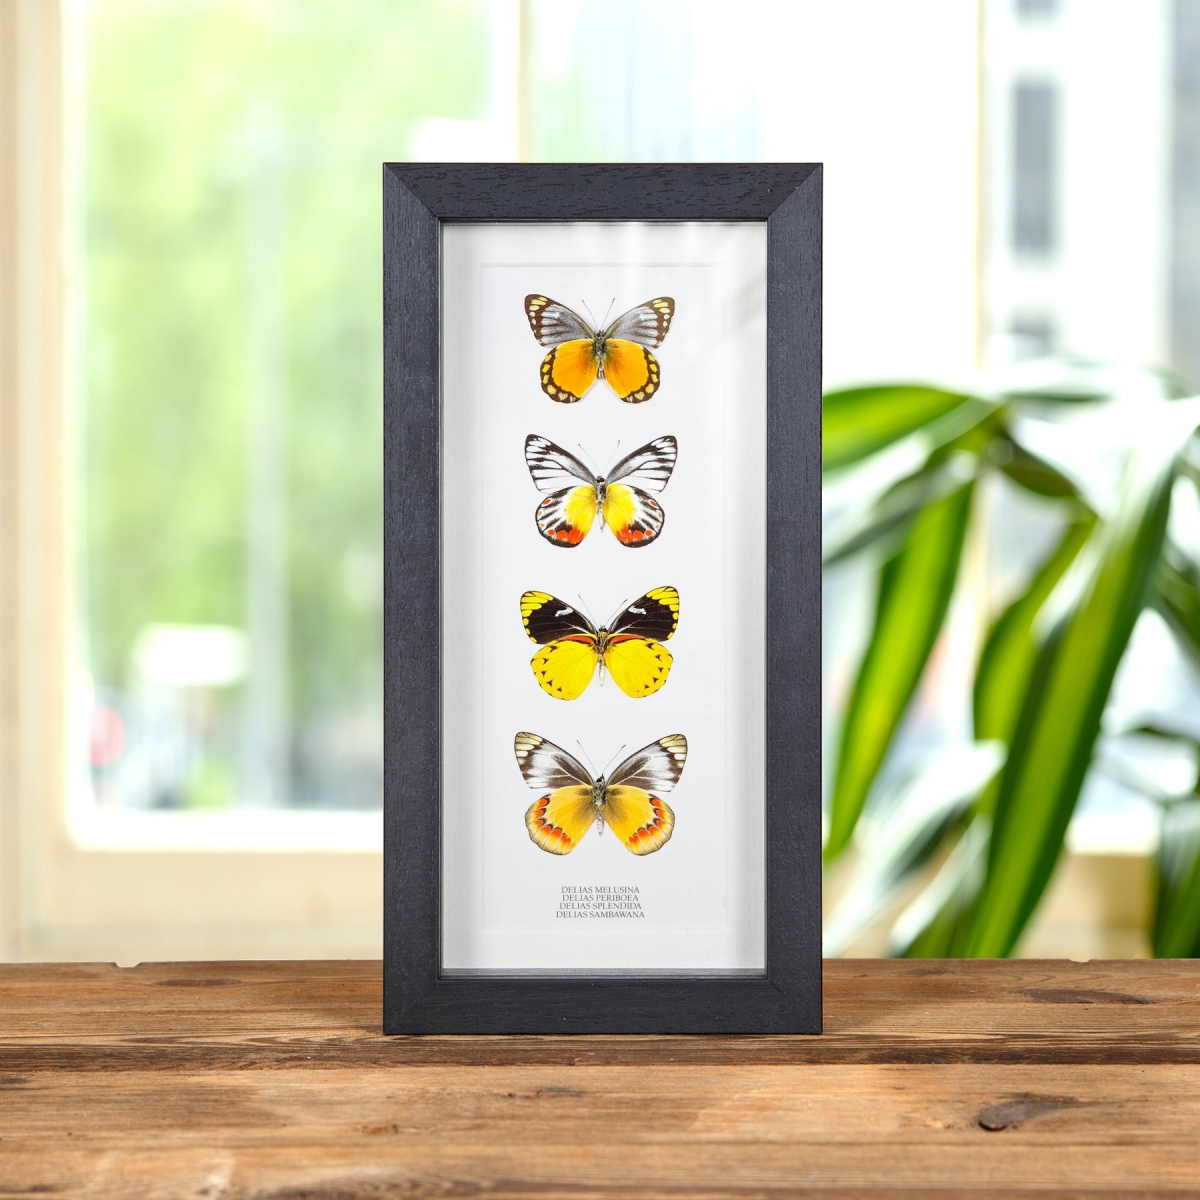 Minibeast Delias Butterfly Quartet In Box Frame (Delias melusina, splendida, sambawana & periboea)